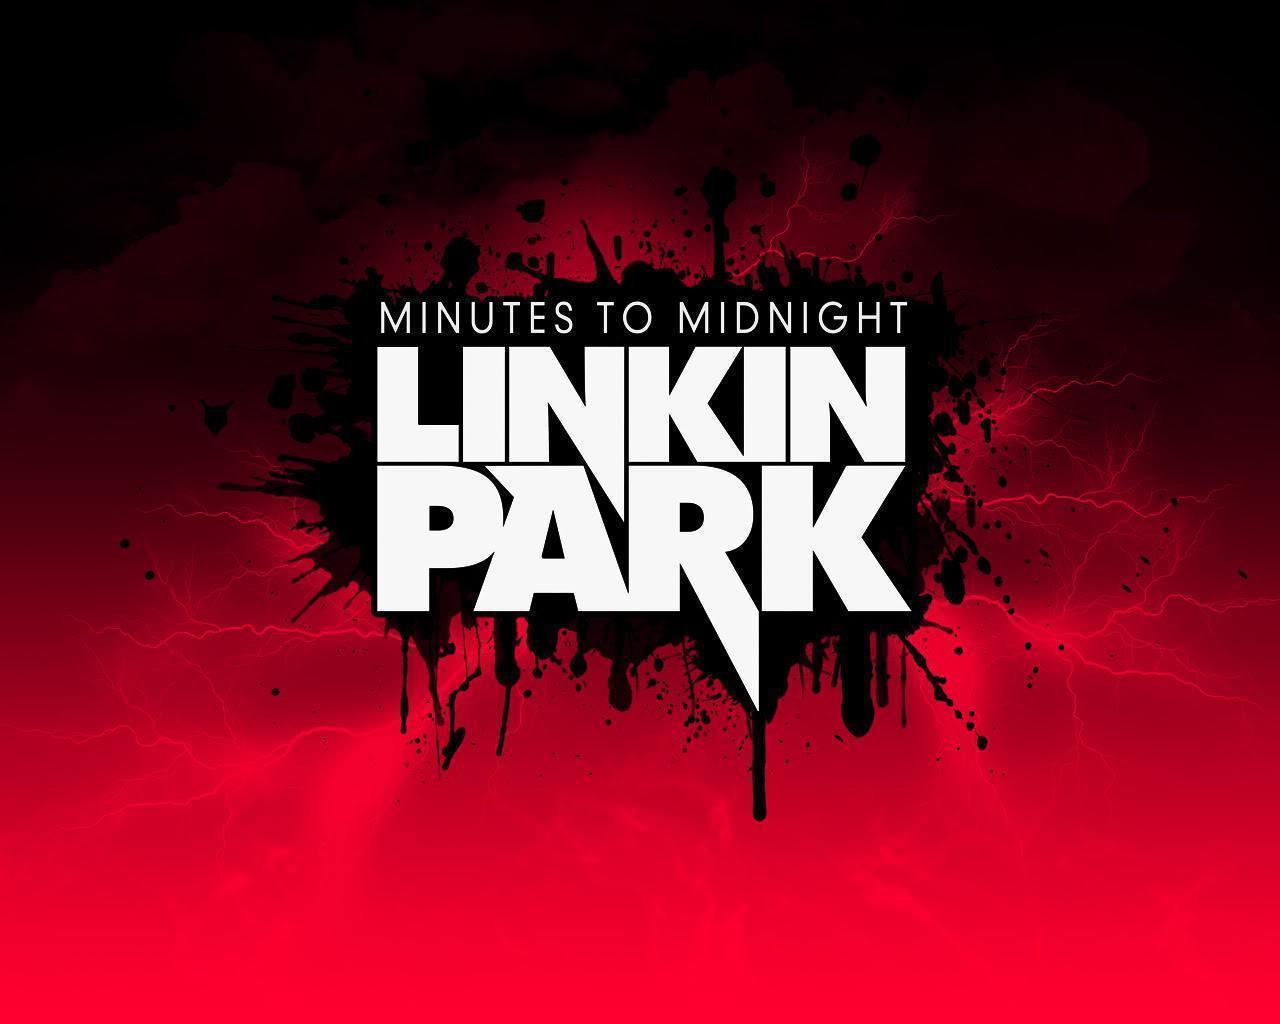 Linkin Park Logo Wallpaper 1280x1024 px Free Download